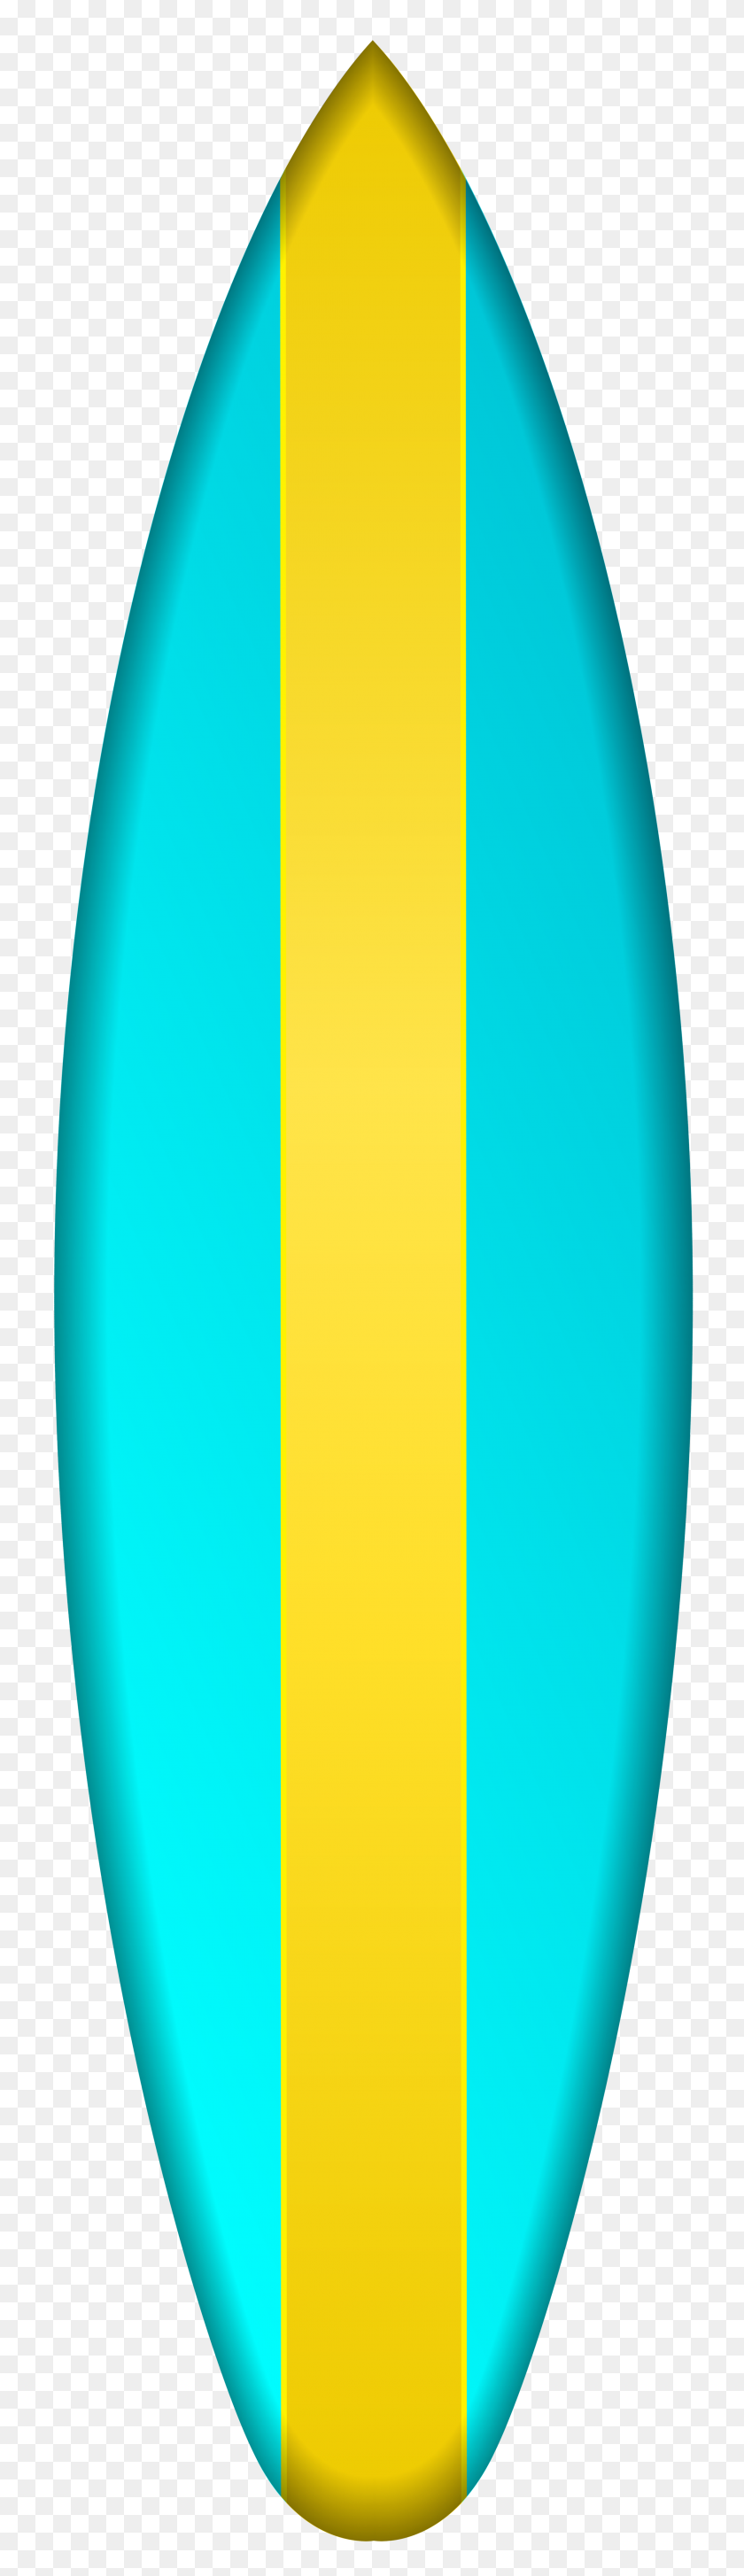 2190x8000 Surfboard Clipart Regarding Surfboard Clipart - Surfboard Clipart Black And White